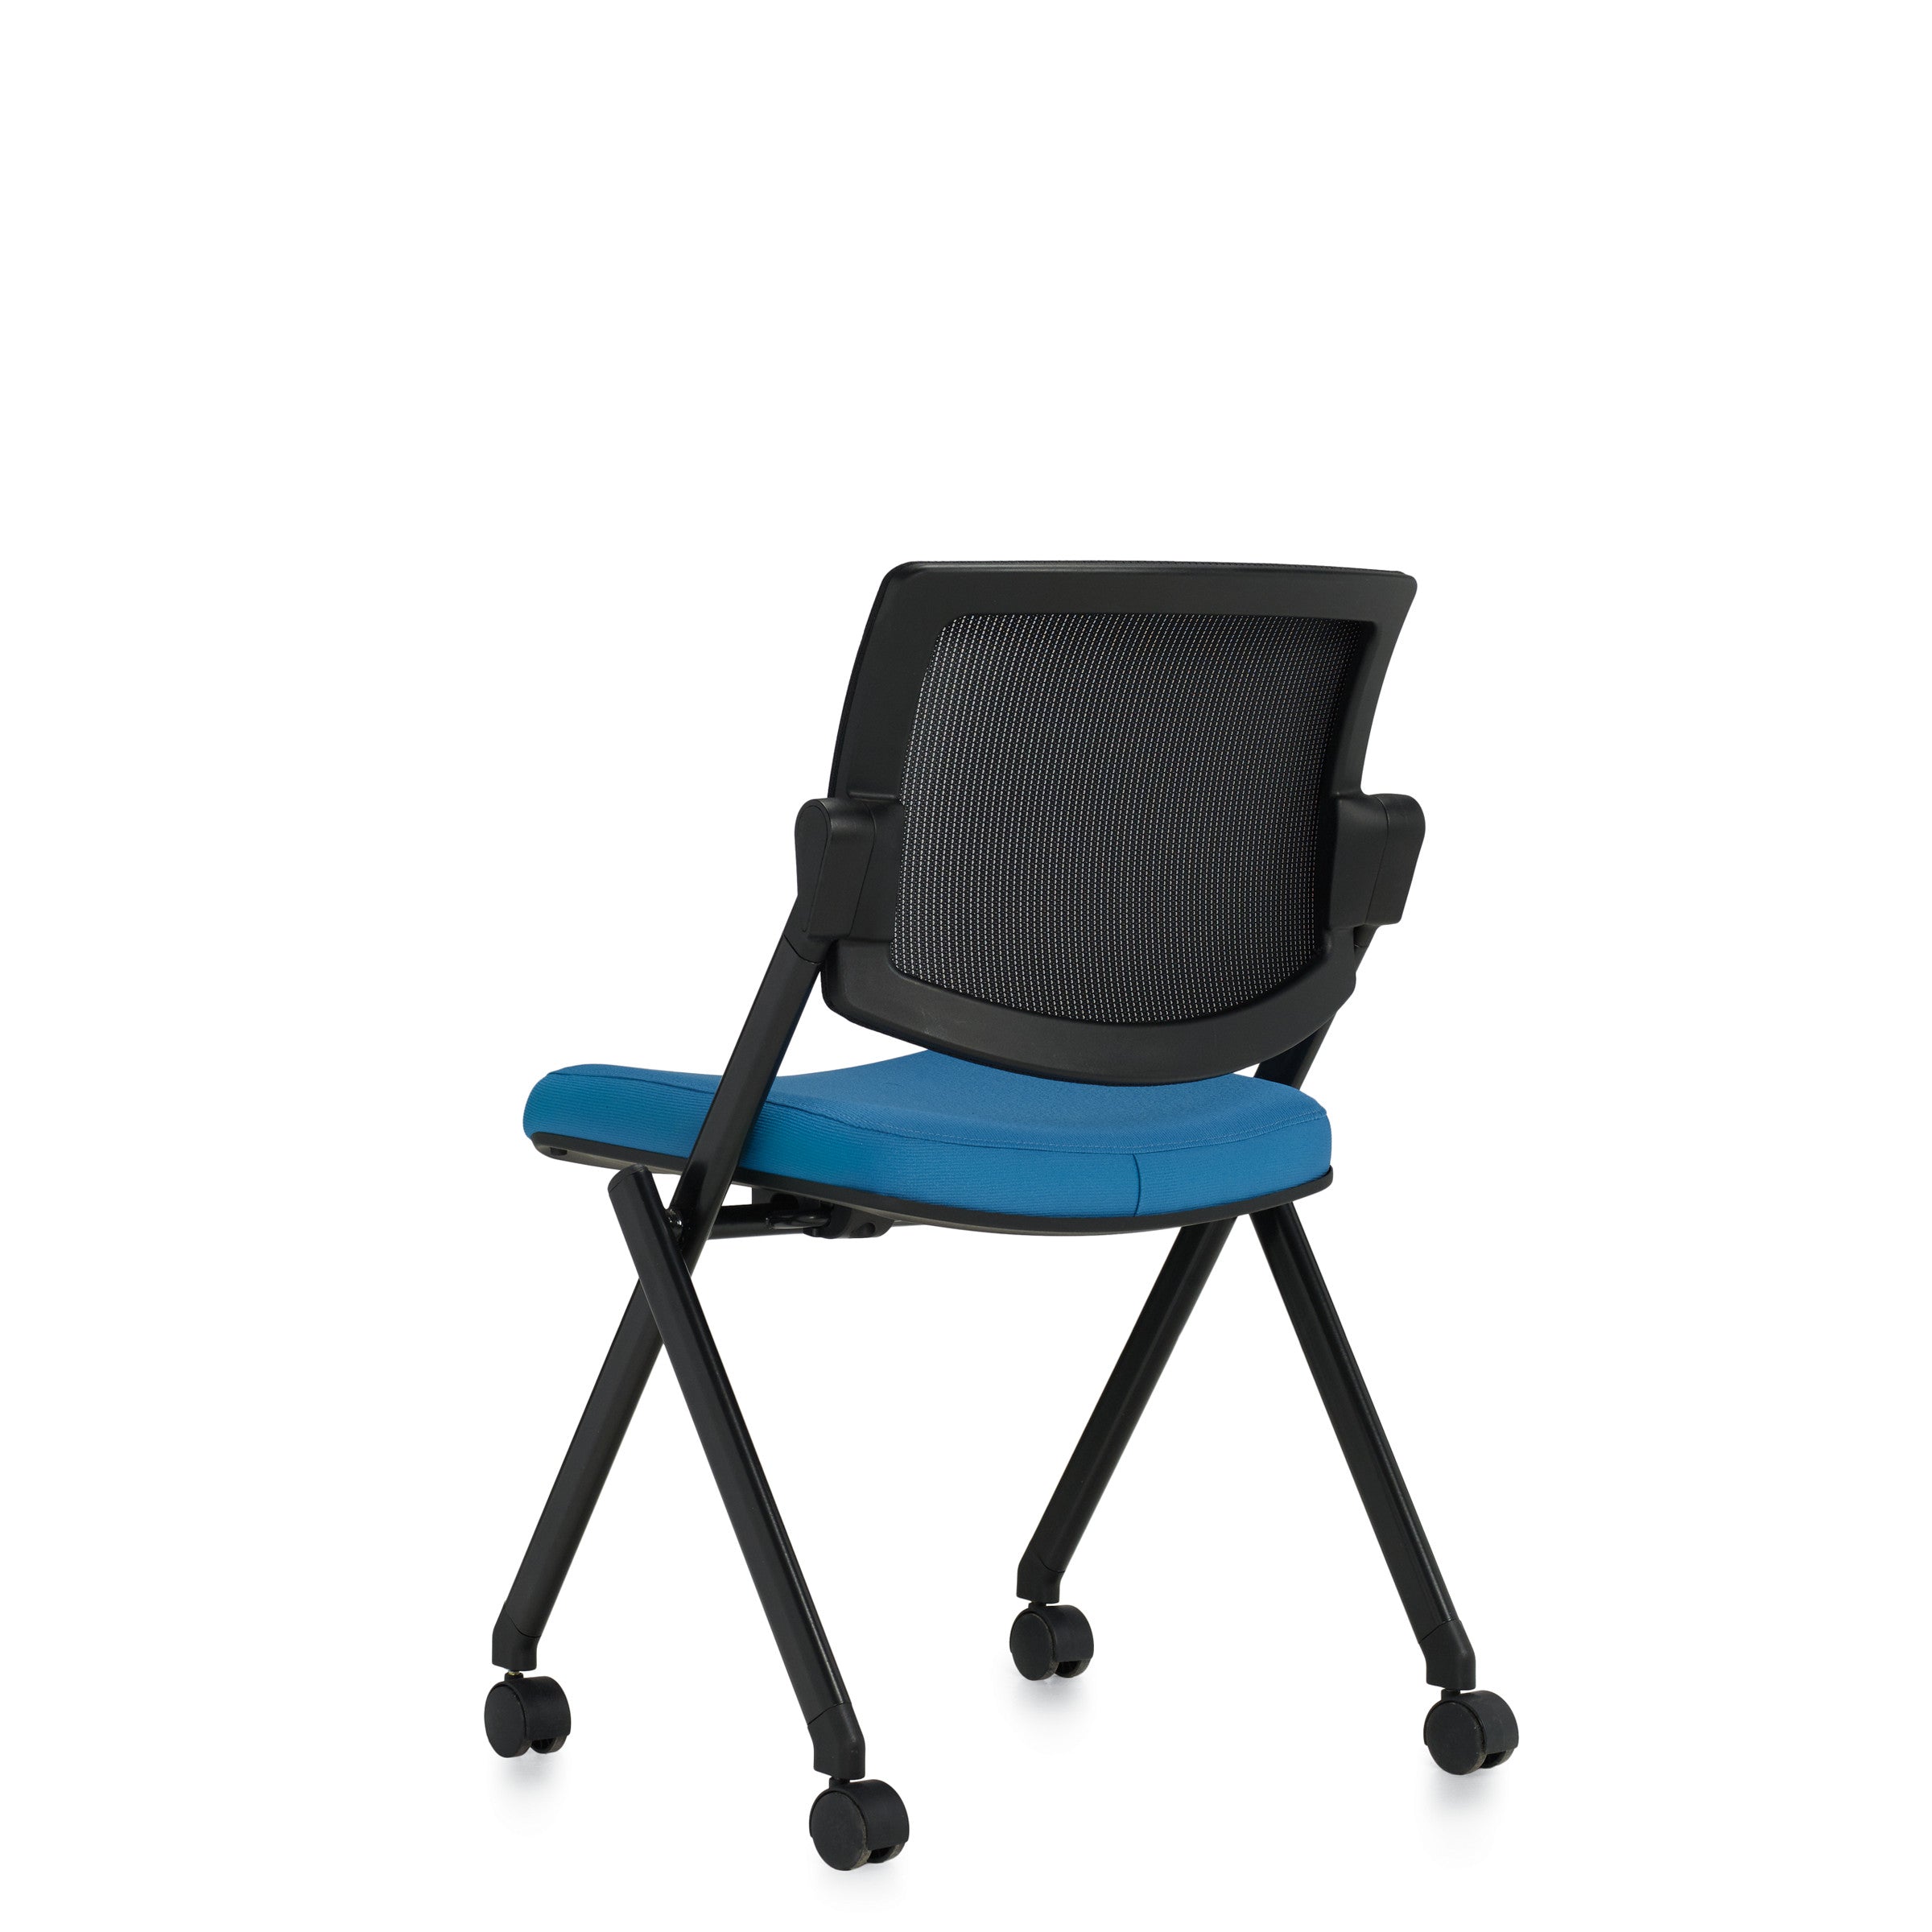 Customized Flip Seat Mesh Back Guest Chair G11340-1 - Kainosbuy.com